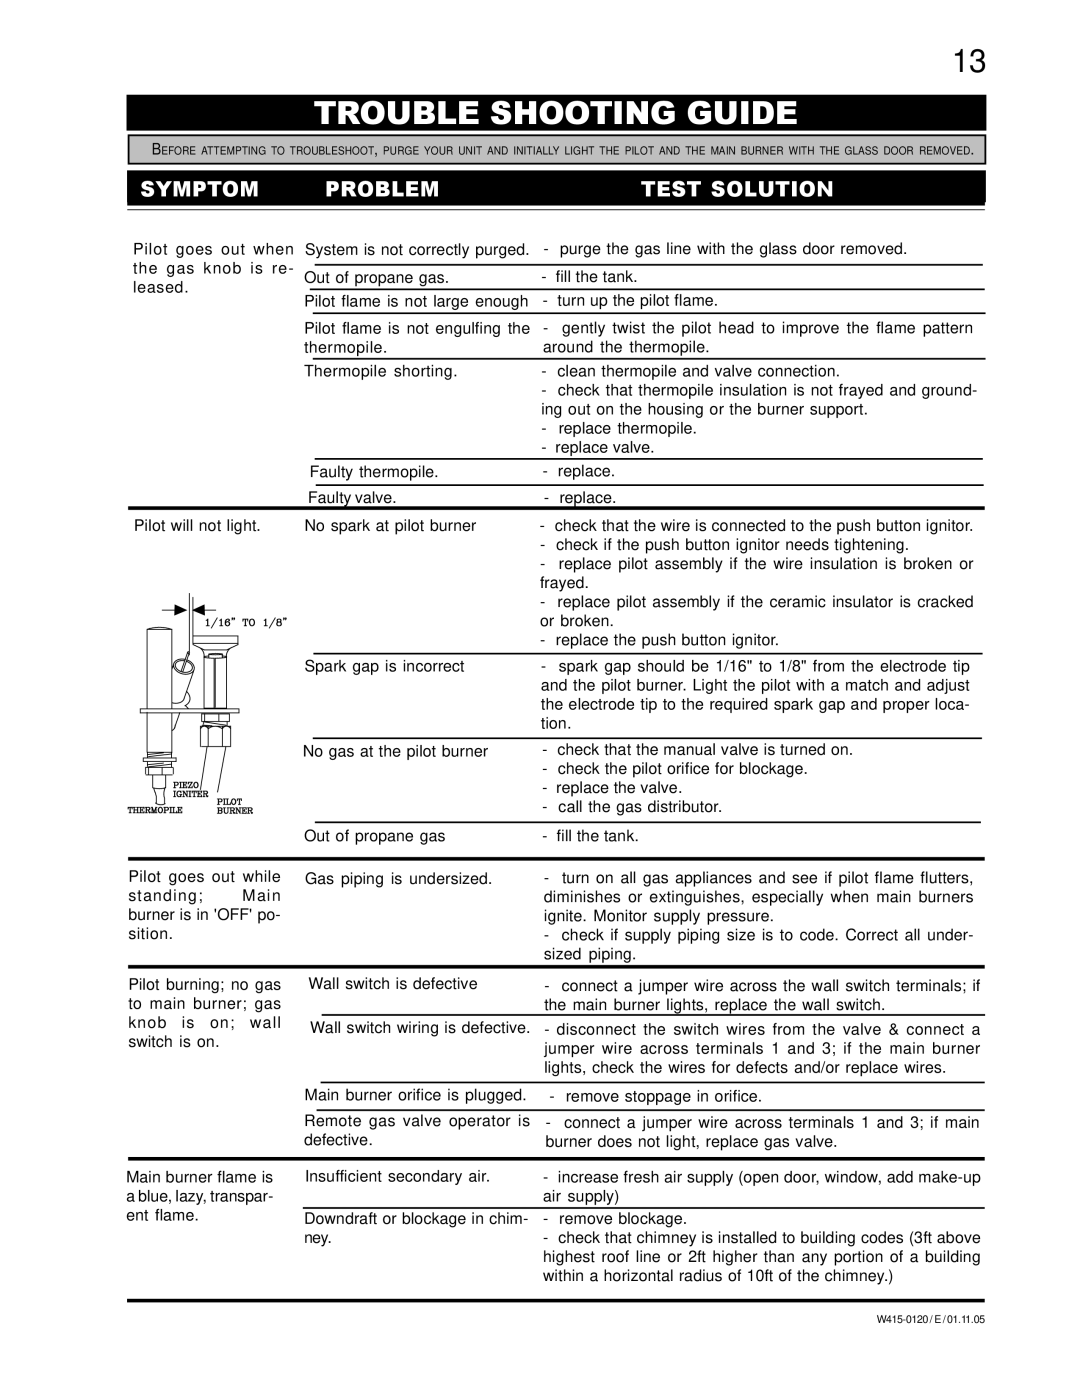 Continental CBI 360-N, CBI 360-P manual Trouble Shooting Guide, Symptom, Problem, Test Solution 